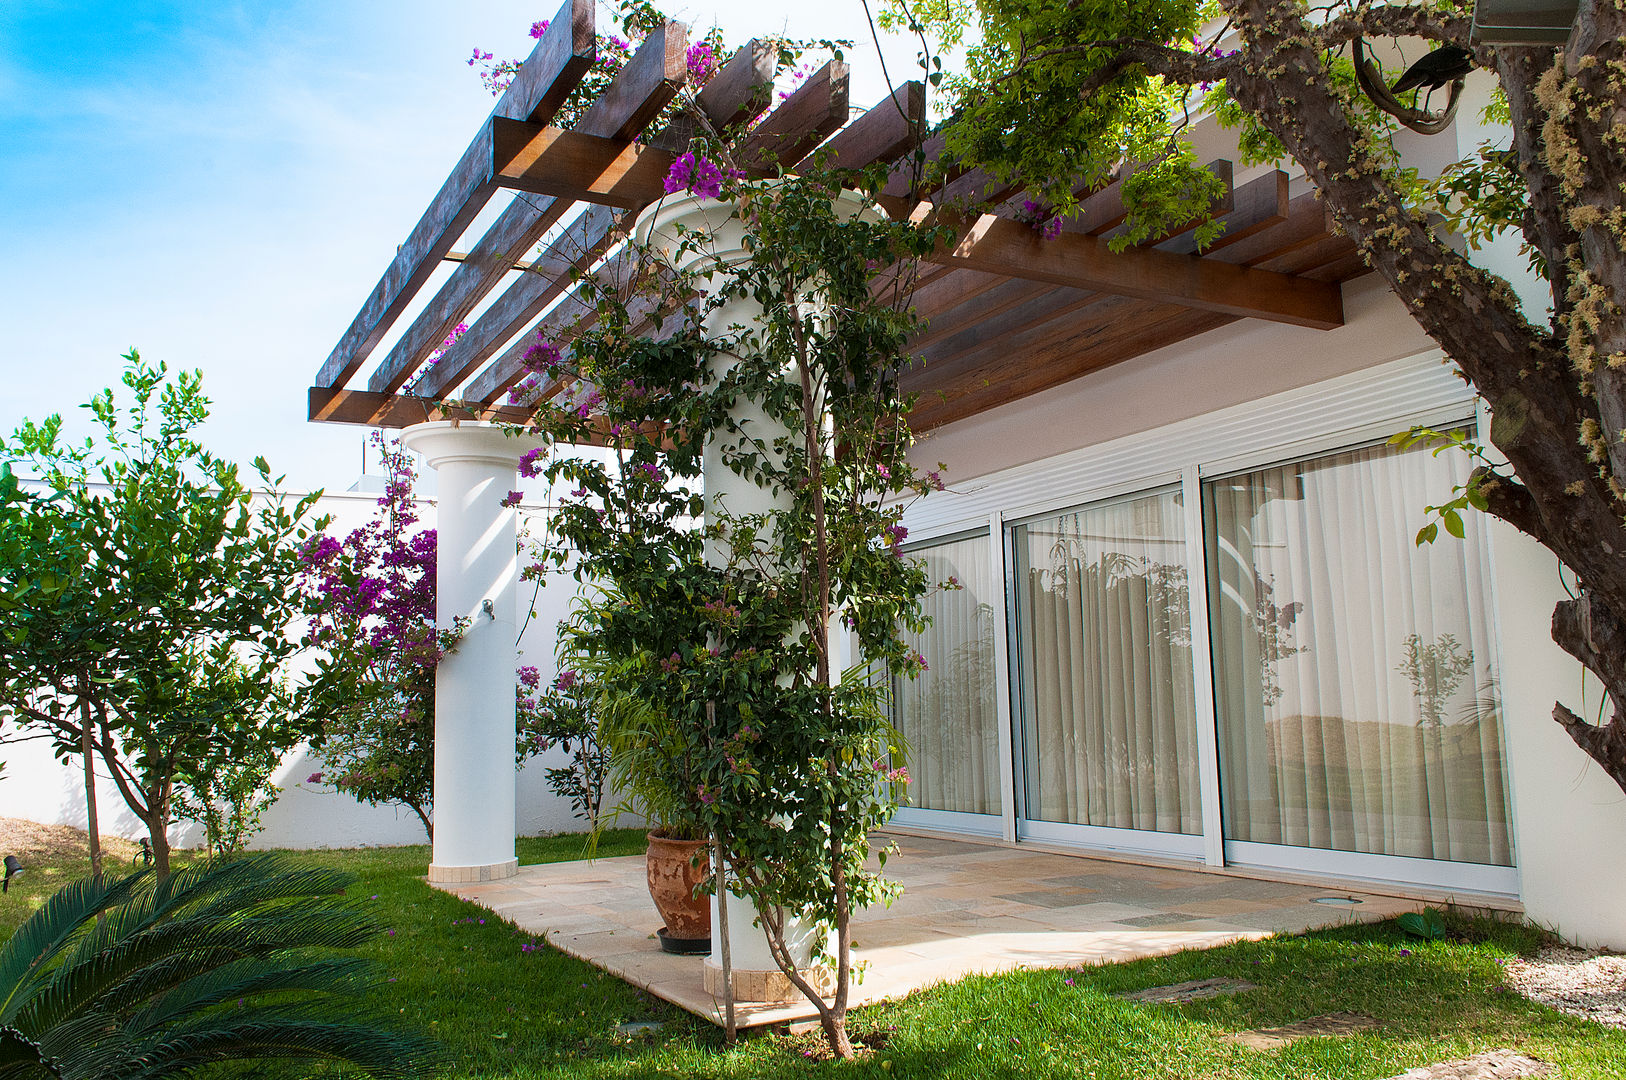 Casa ED, Lozí - Projeto e Obra Lozí - Projeto e Obra Country style balcony, veranda & terrace